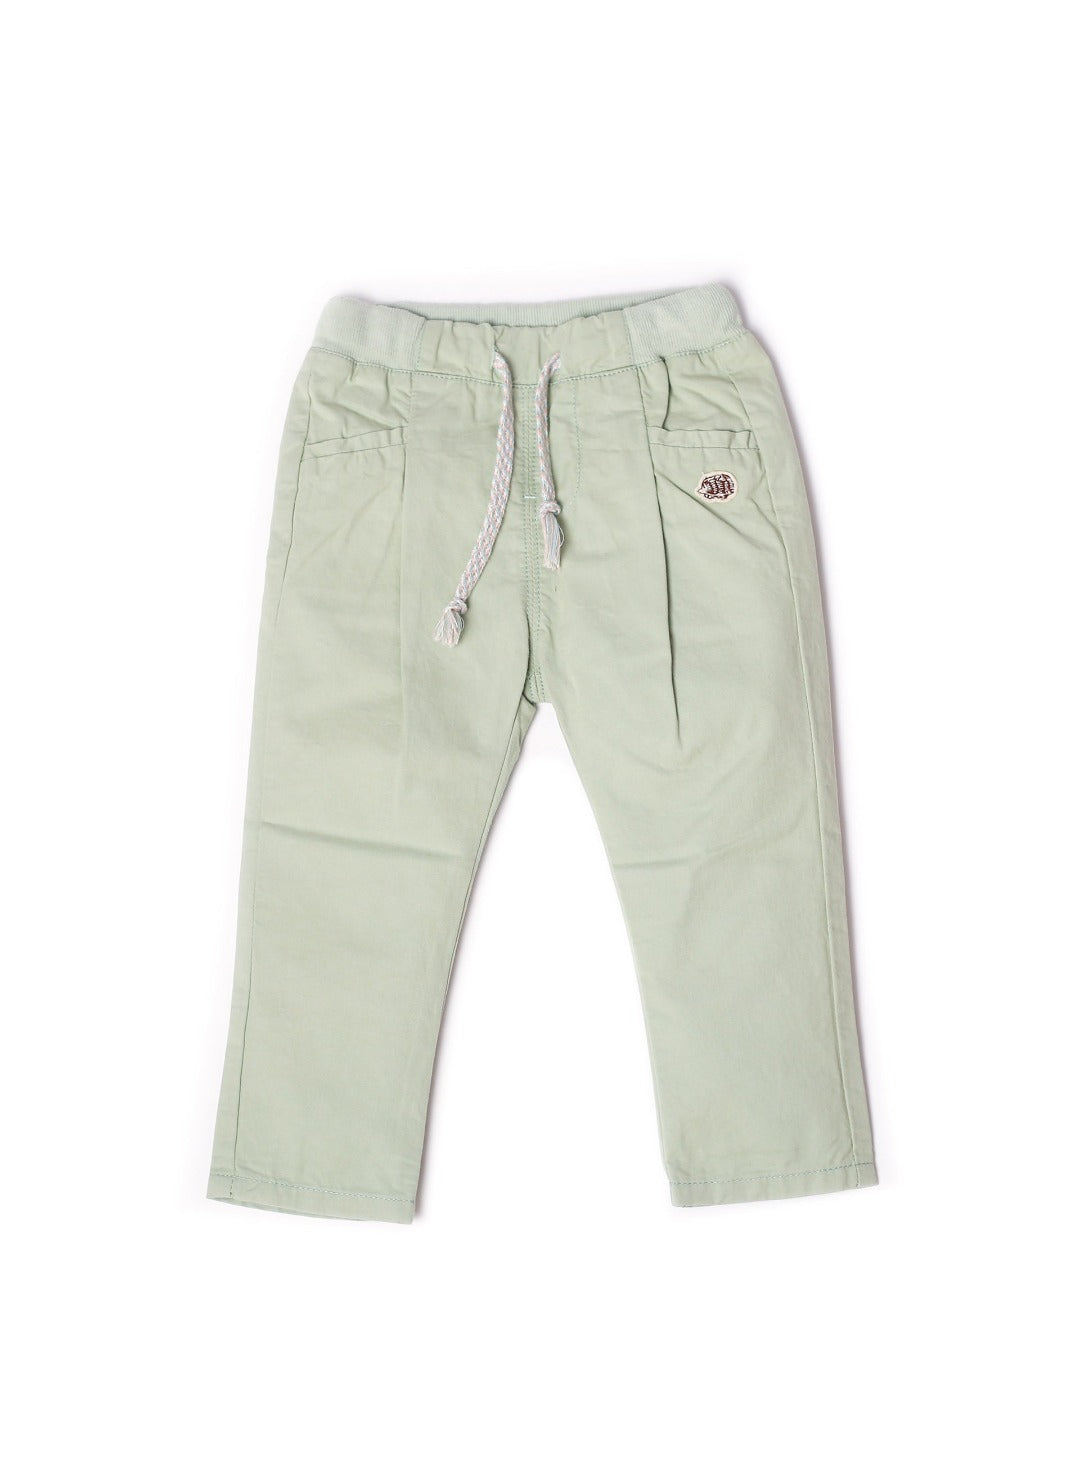 mint green long pants with drawstring